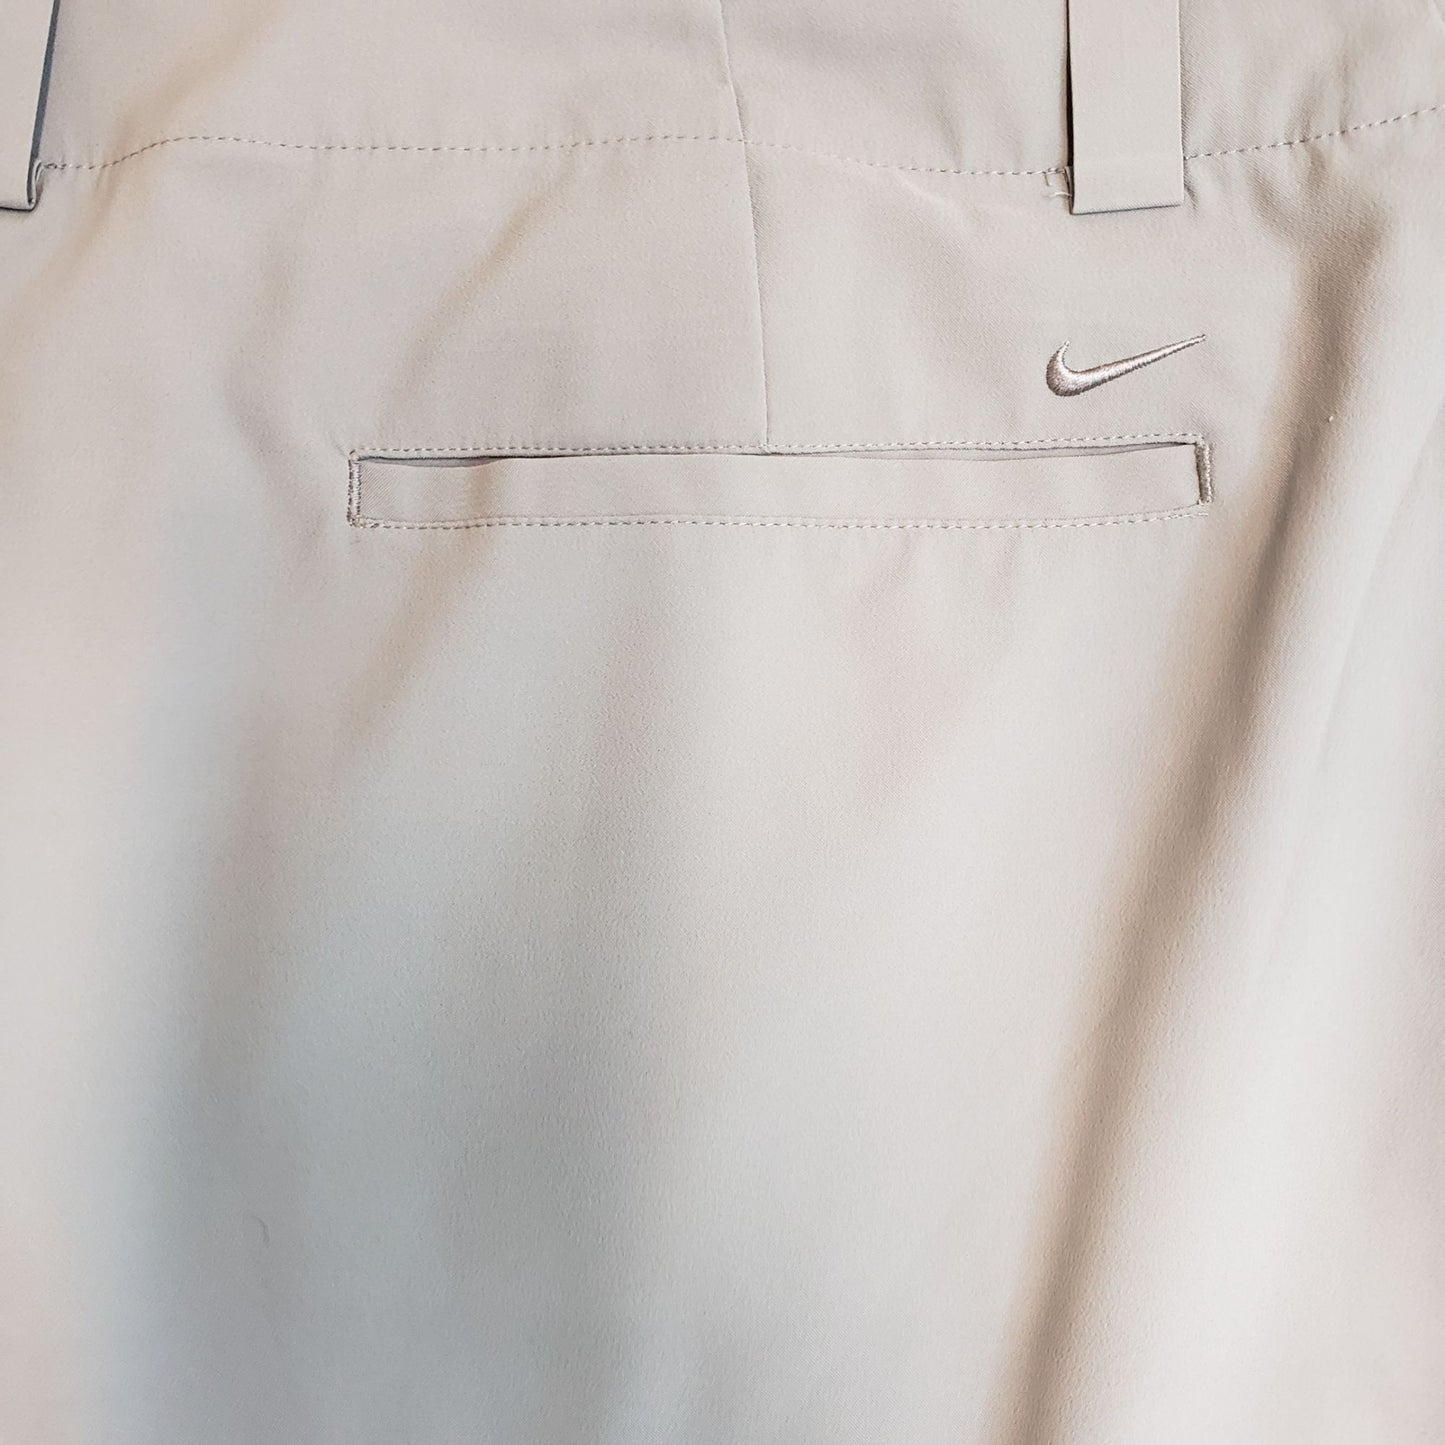 Nike Dri-Fit Activewear Tennis Skorts Size 16